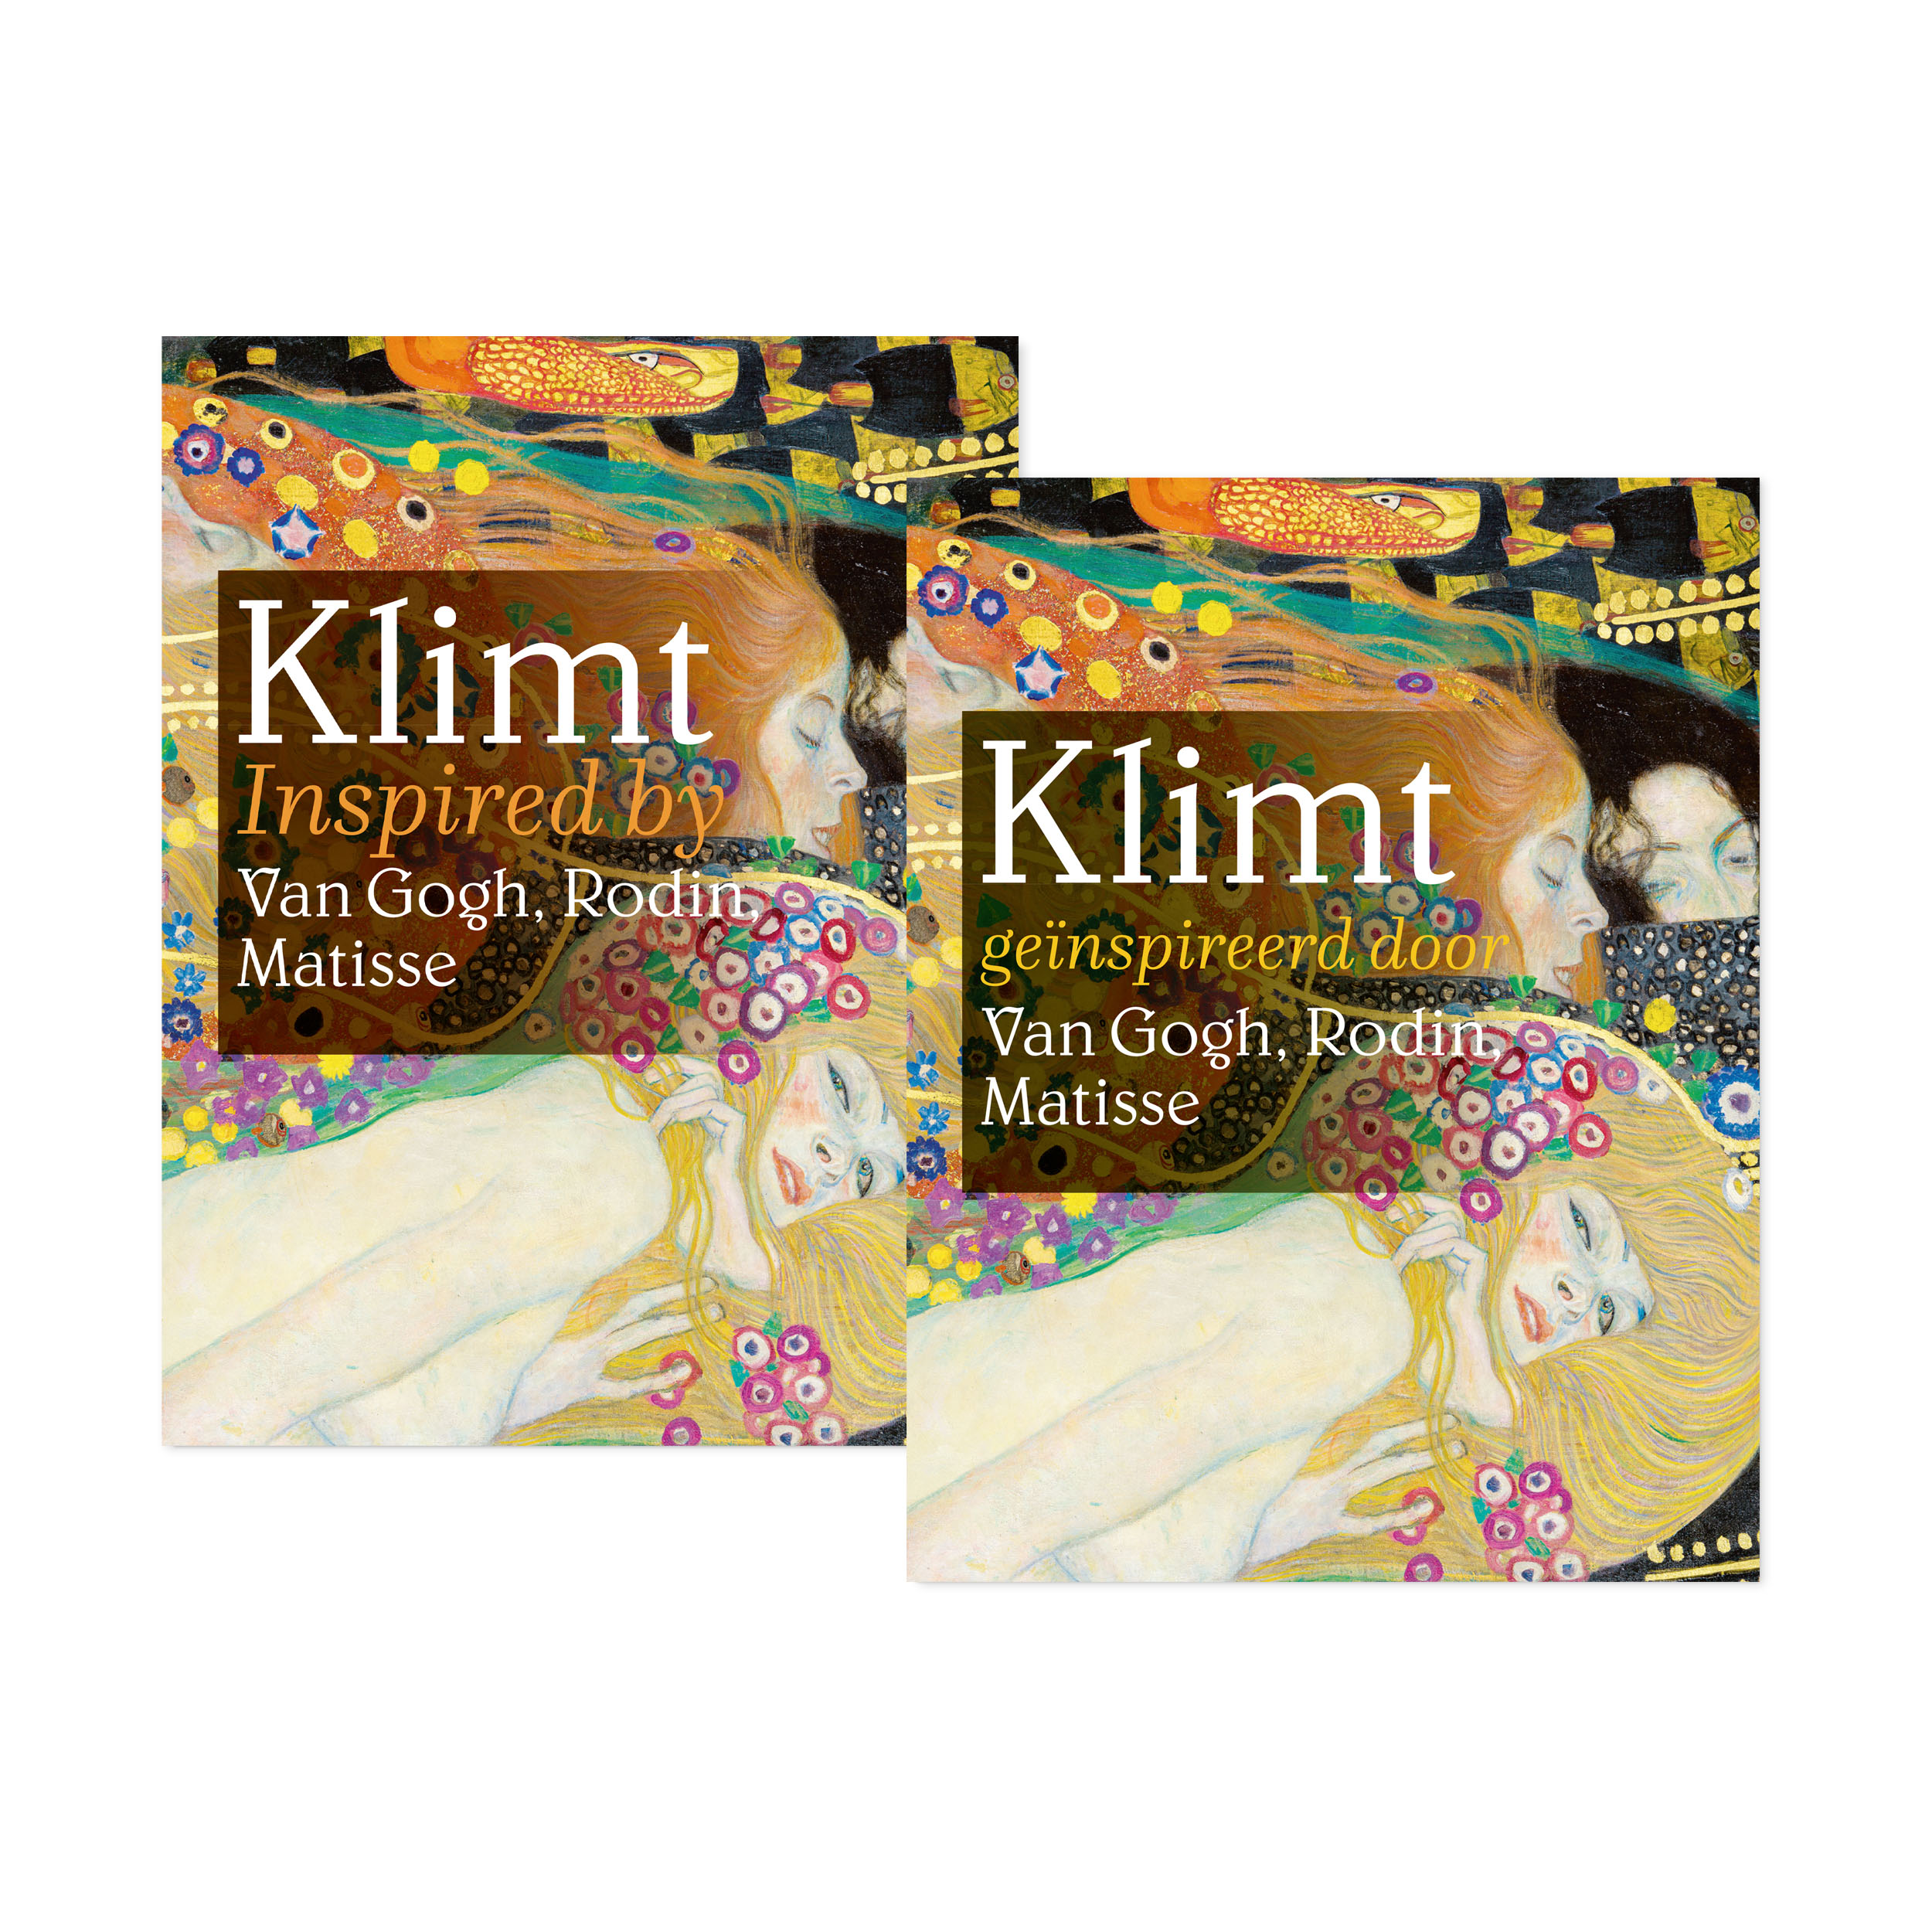 Wiskundige Artistiek Stationair Klimt inspired by Van Gogh, Rodin, Matisse - English - Van Gogh Museum shop